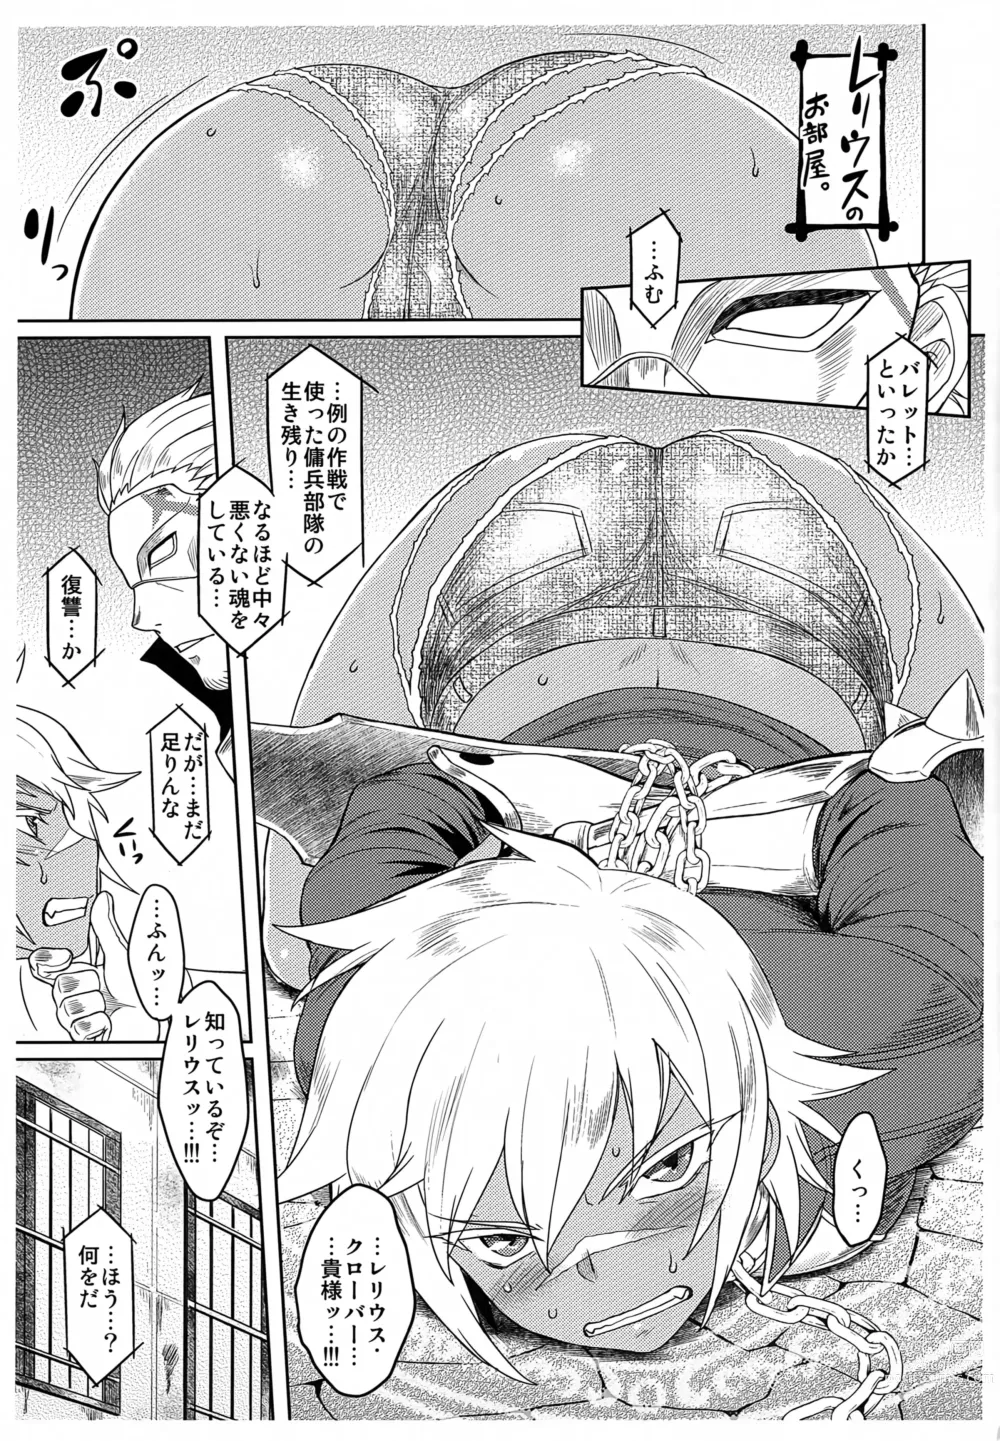 Page 3 of doujinshi Bullet-san o Ijimetai.